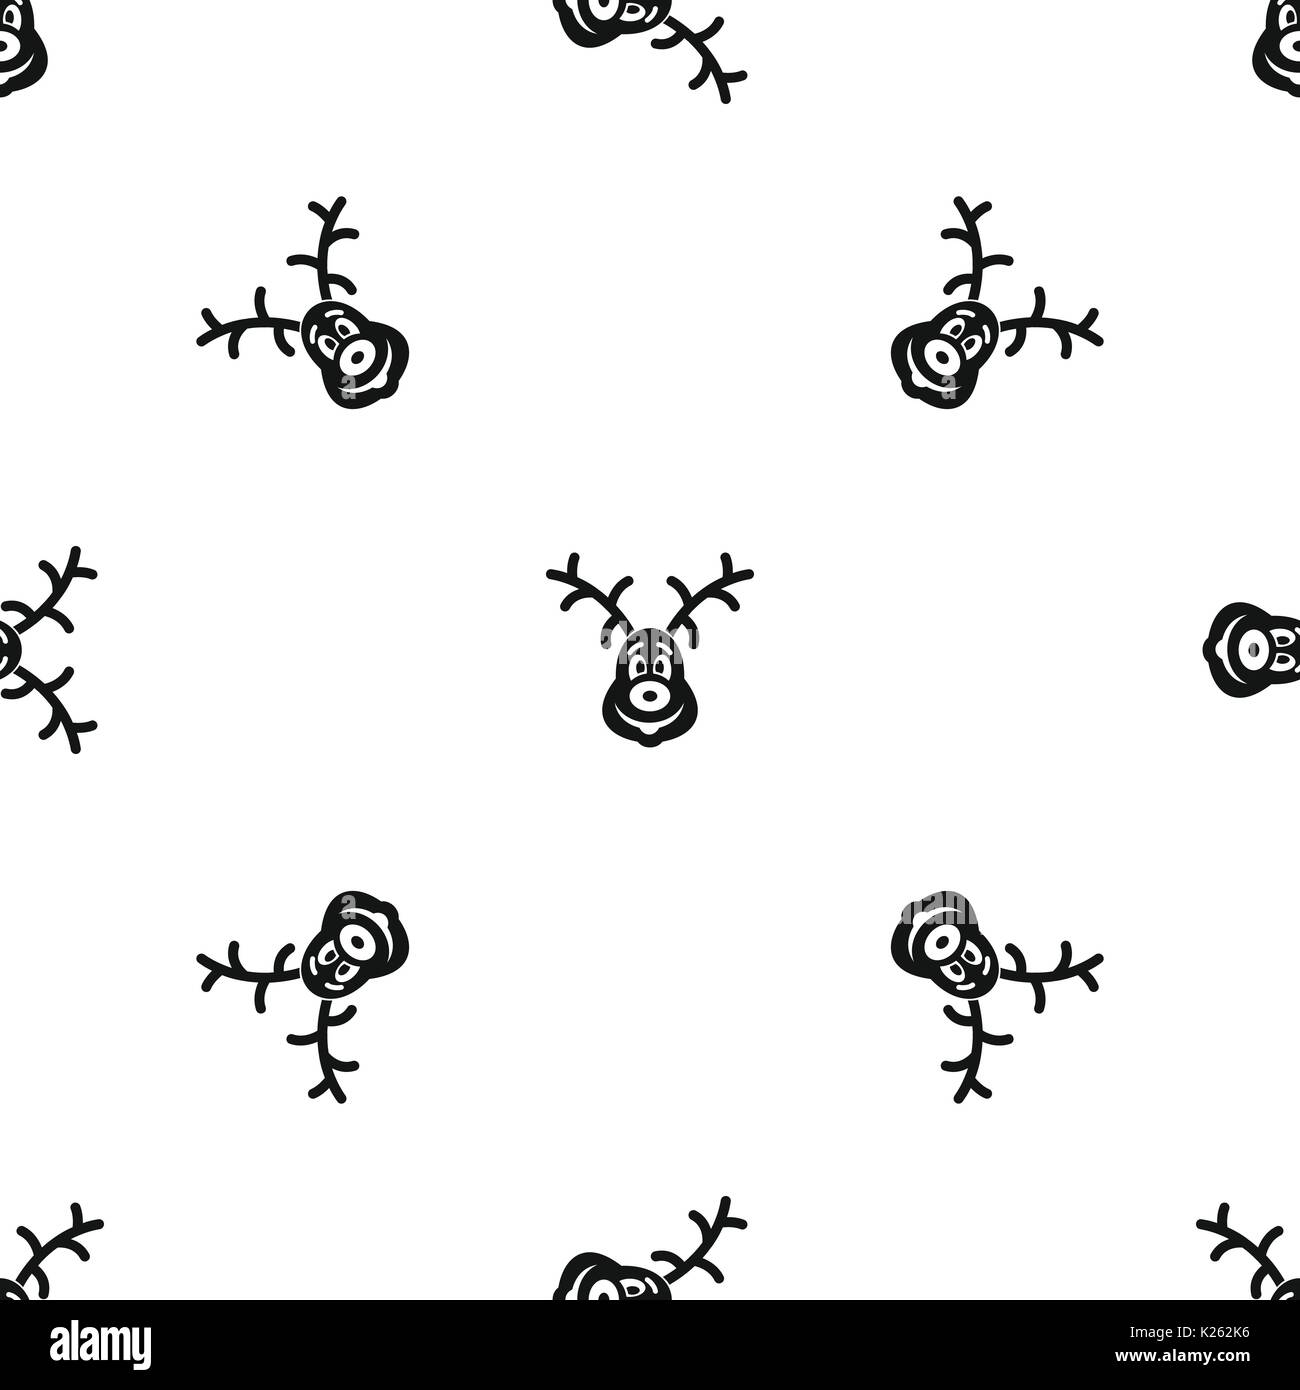 Christmas deer pattern seamless black Stock Image